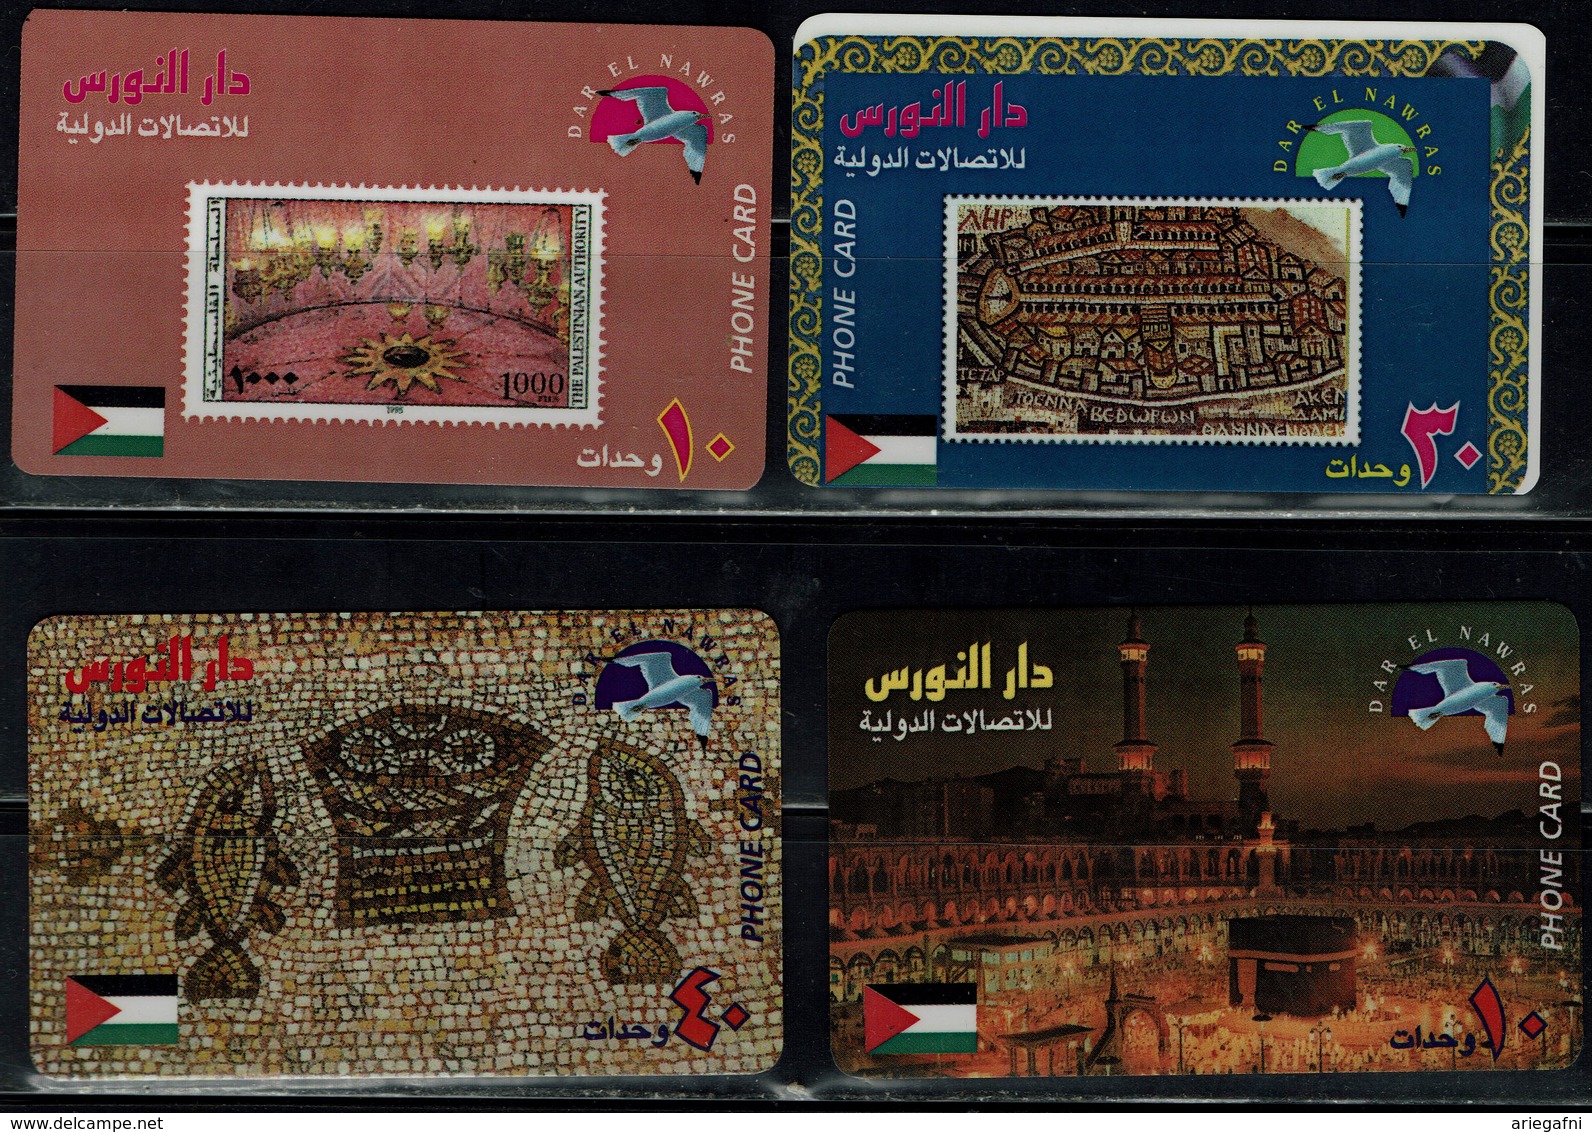 PALESTINE 1996 PHONECARD DAR EL NAWRAS FIRST OF STEMP SET OF 4 CARDS TEST MINT VF!! - Palestina